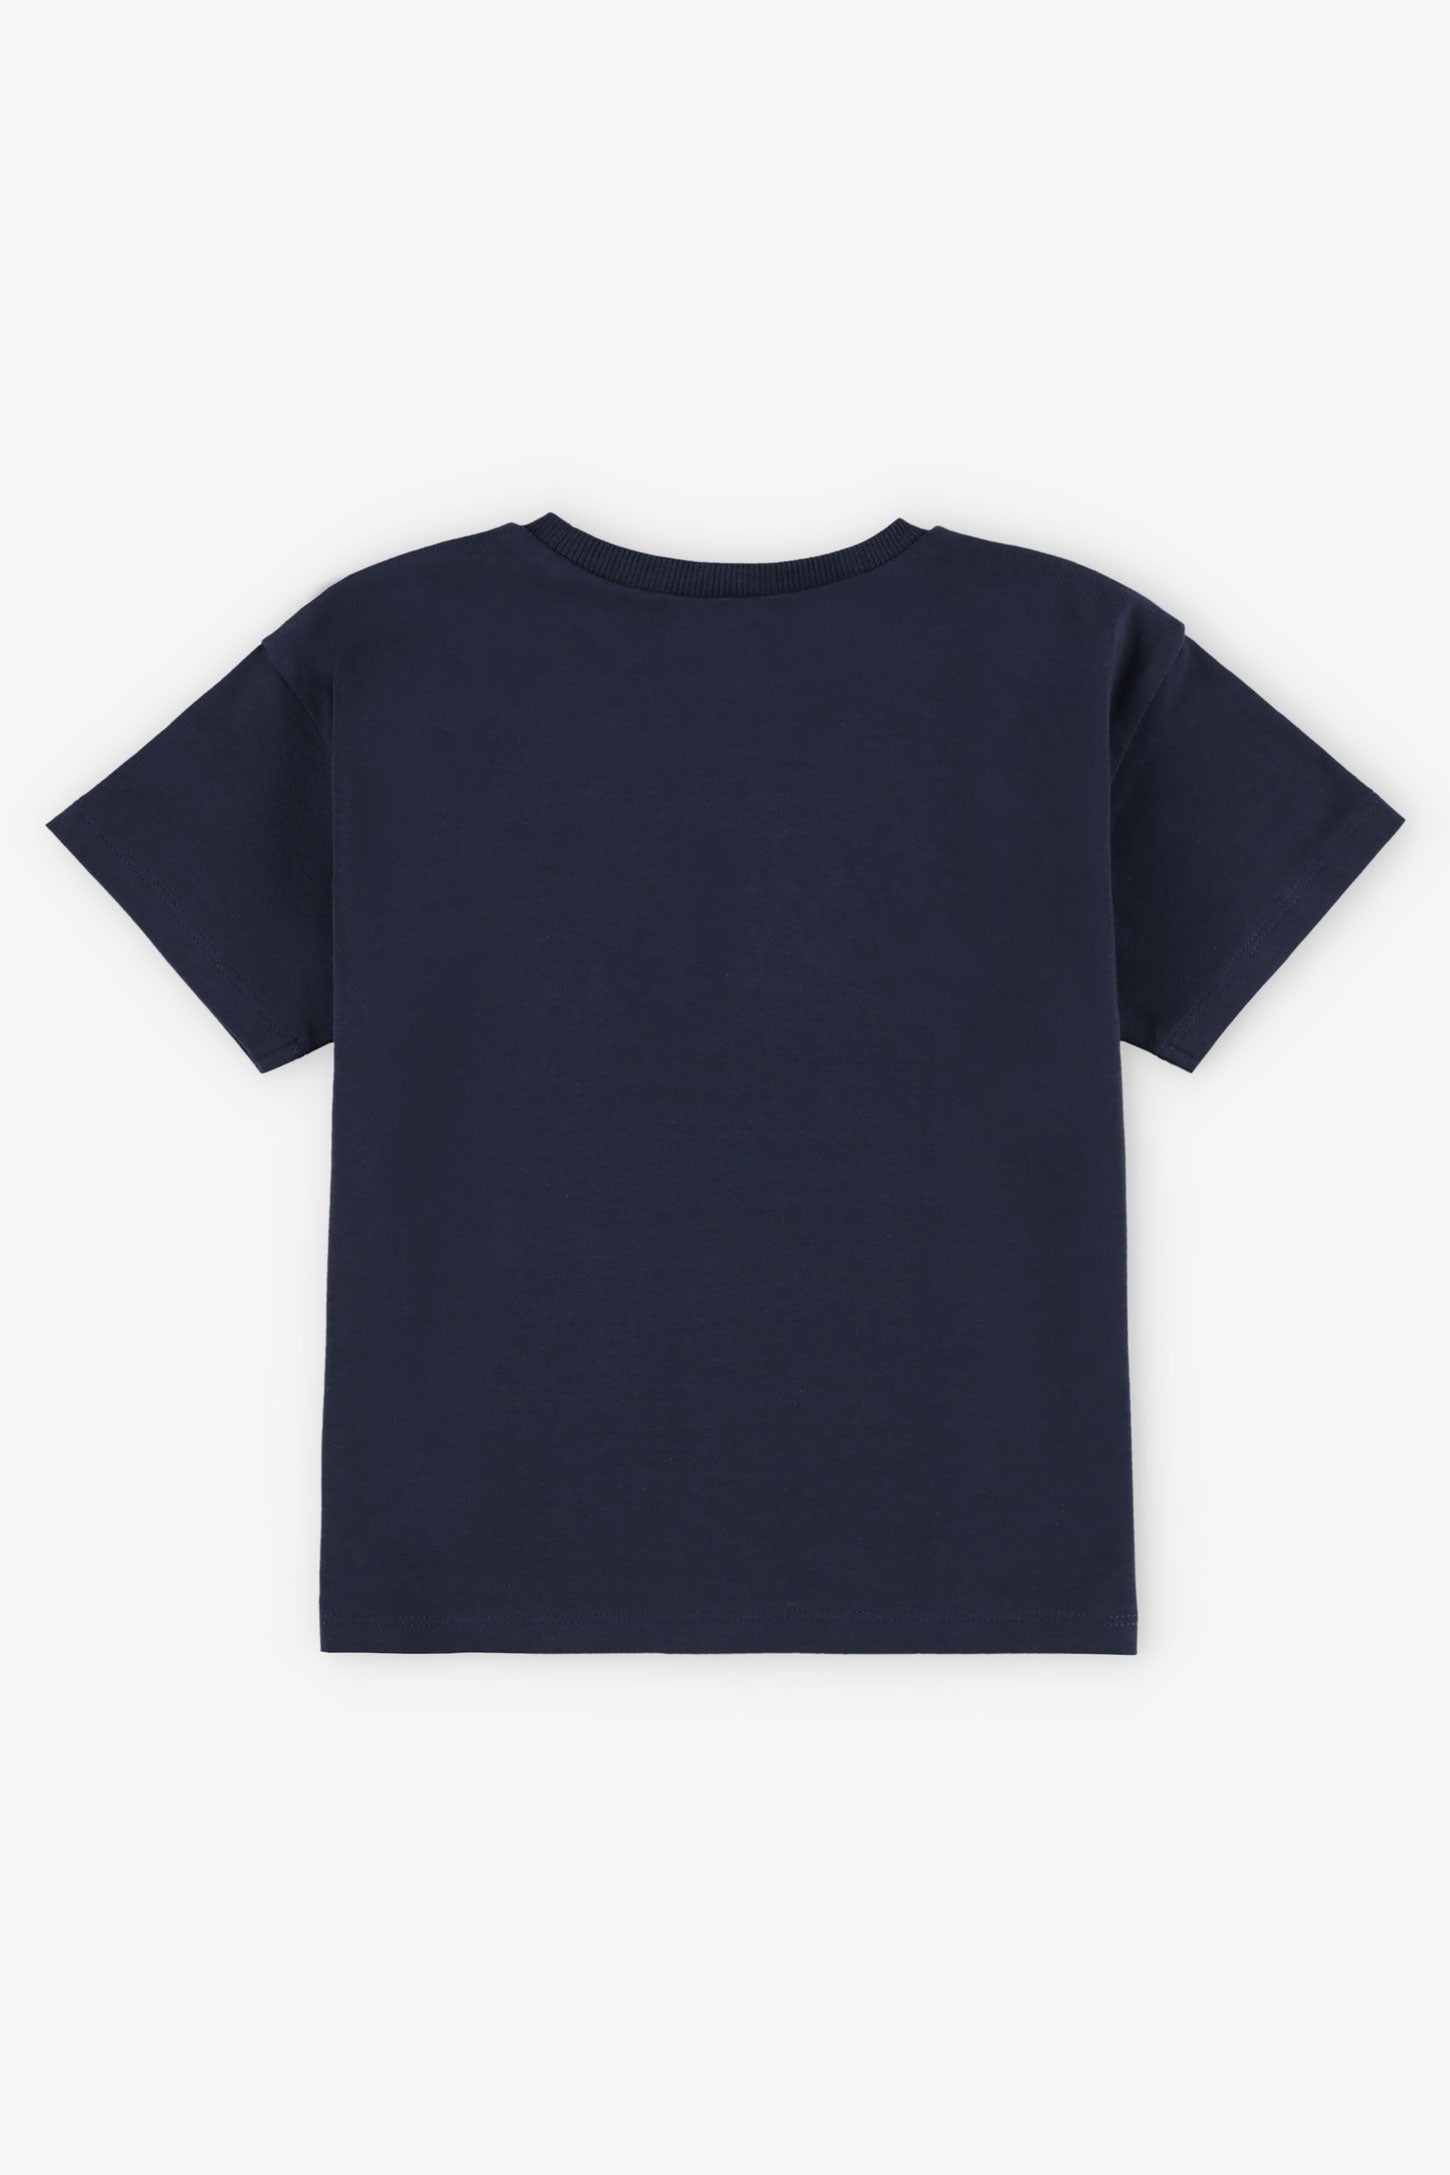 T-shirt col rond en coton, 2T-3T - Bébé garçon && BLEU MARINE